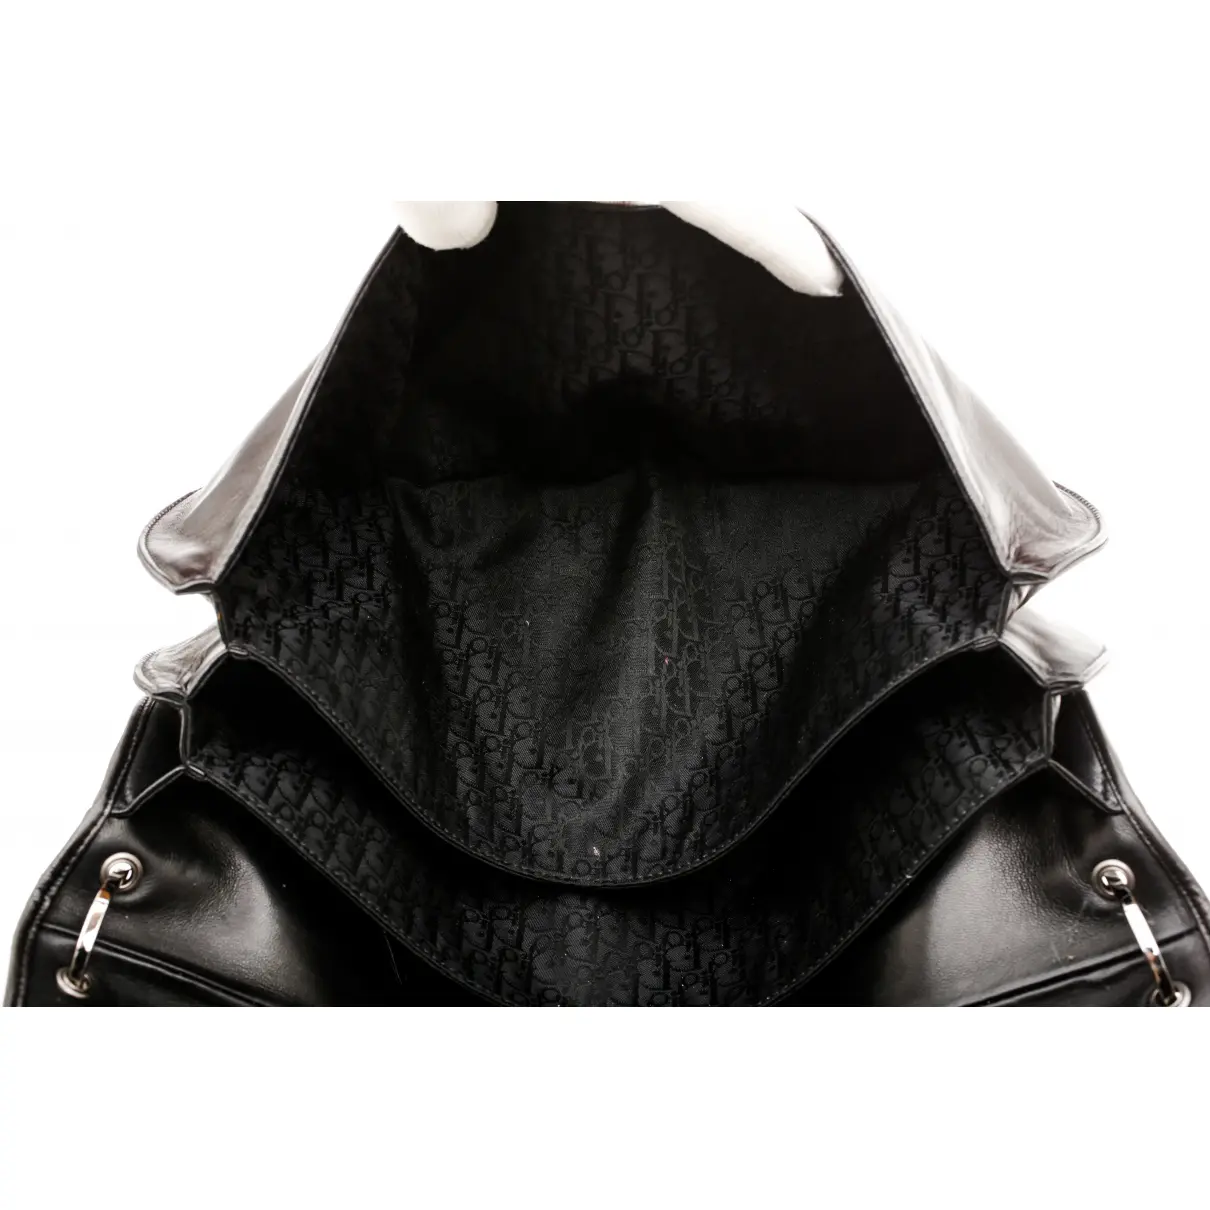 Leather crossbody bag Dior